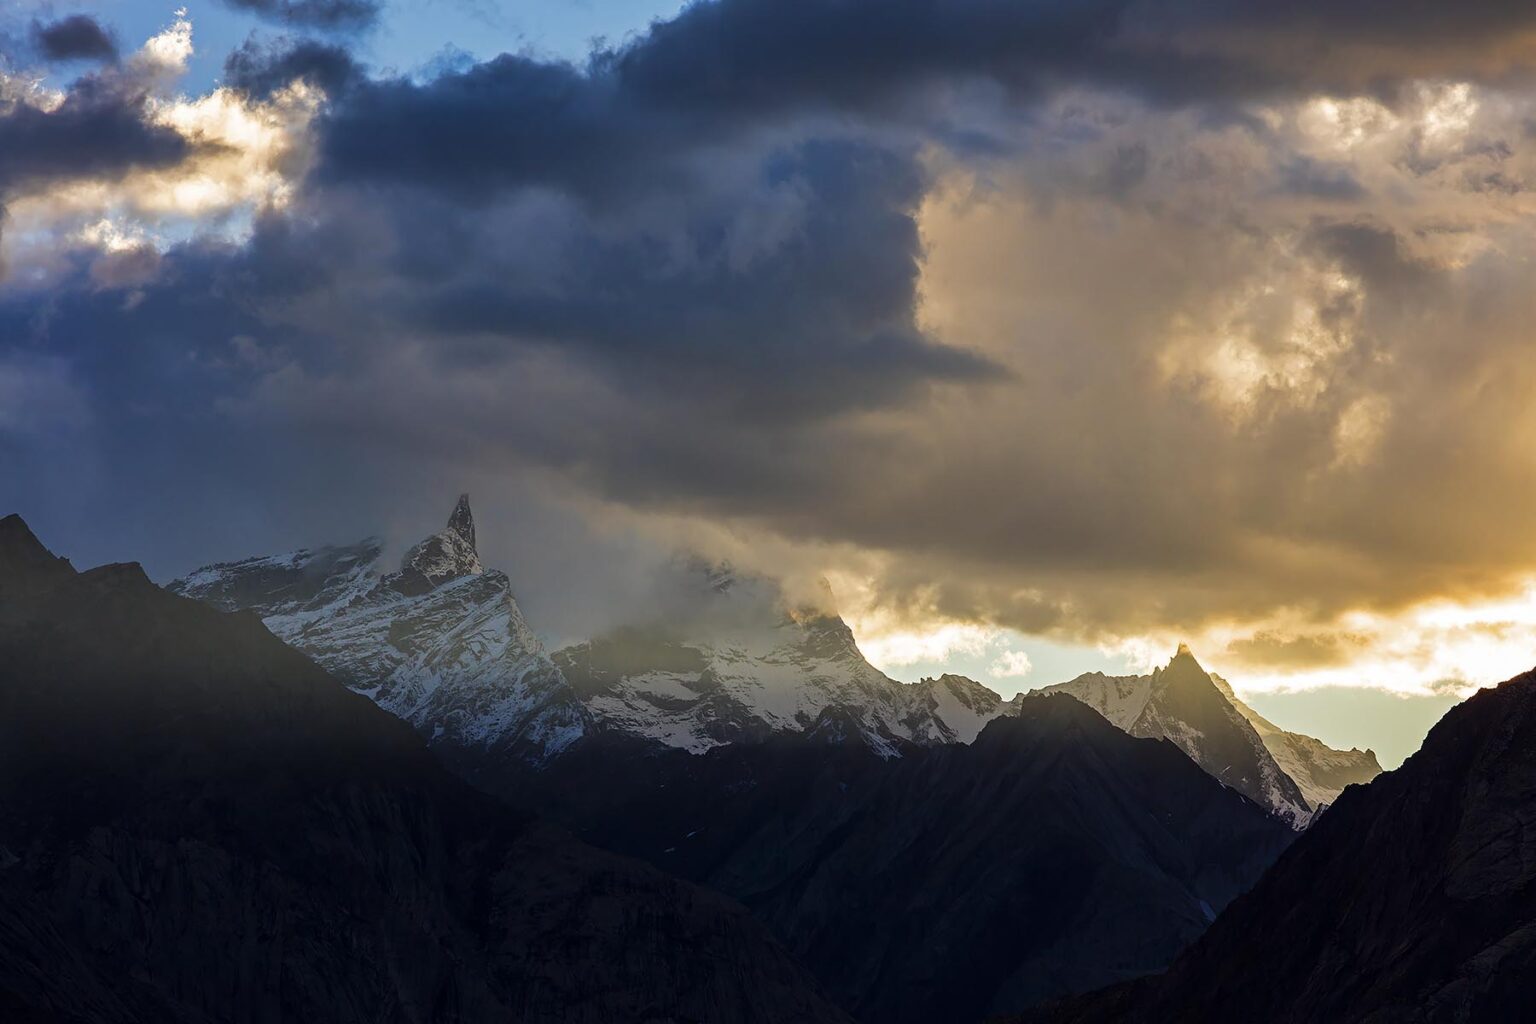 The massive himalayan peaks of NUN and KUN are 23,409 feet high at sunset - ZANSKAR, LADAKH, INDIA